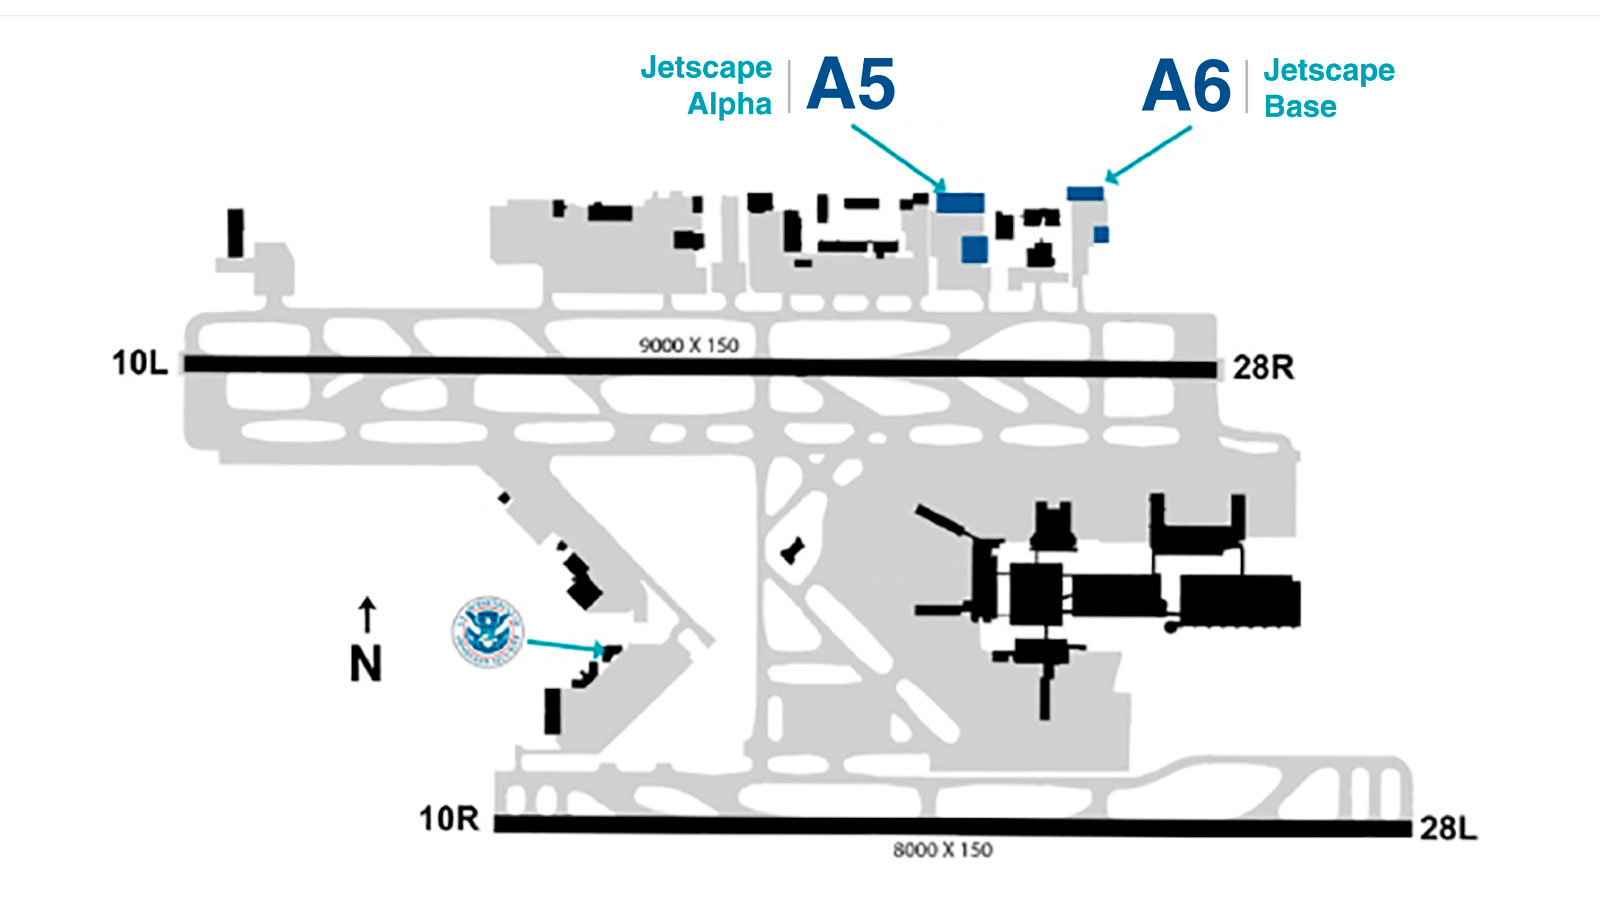 Jetscape Airport Diagram